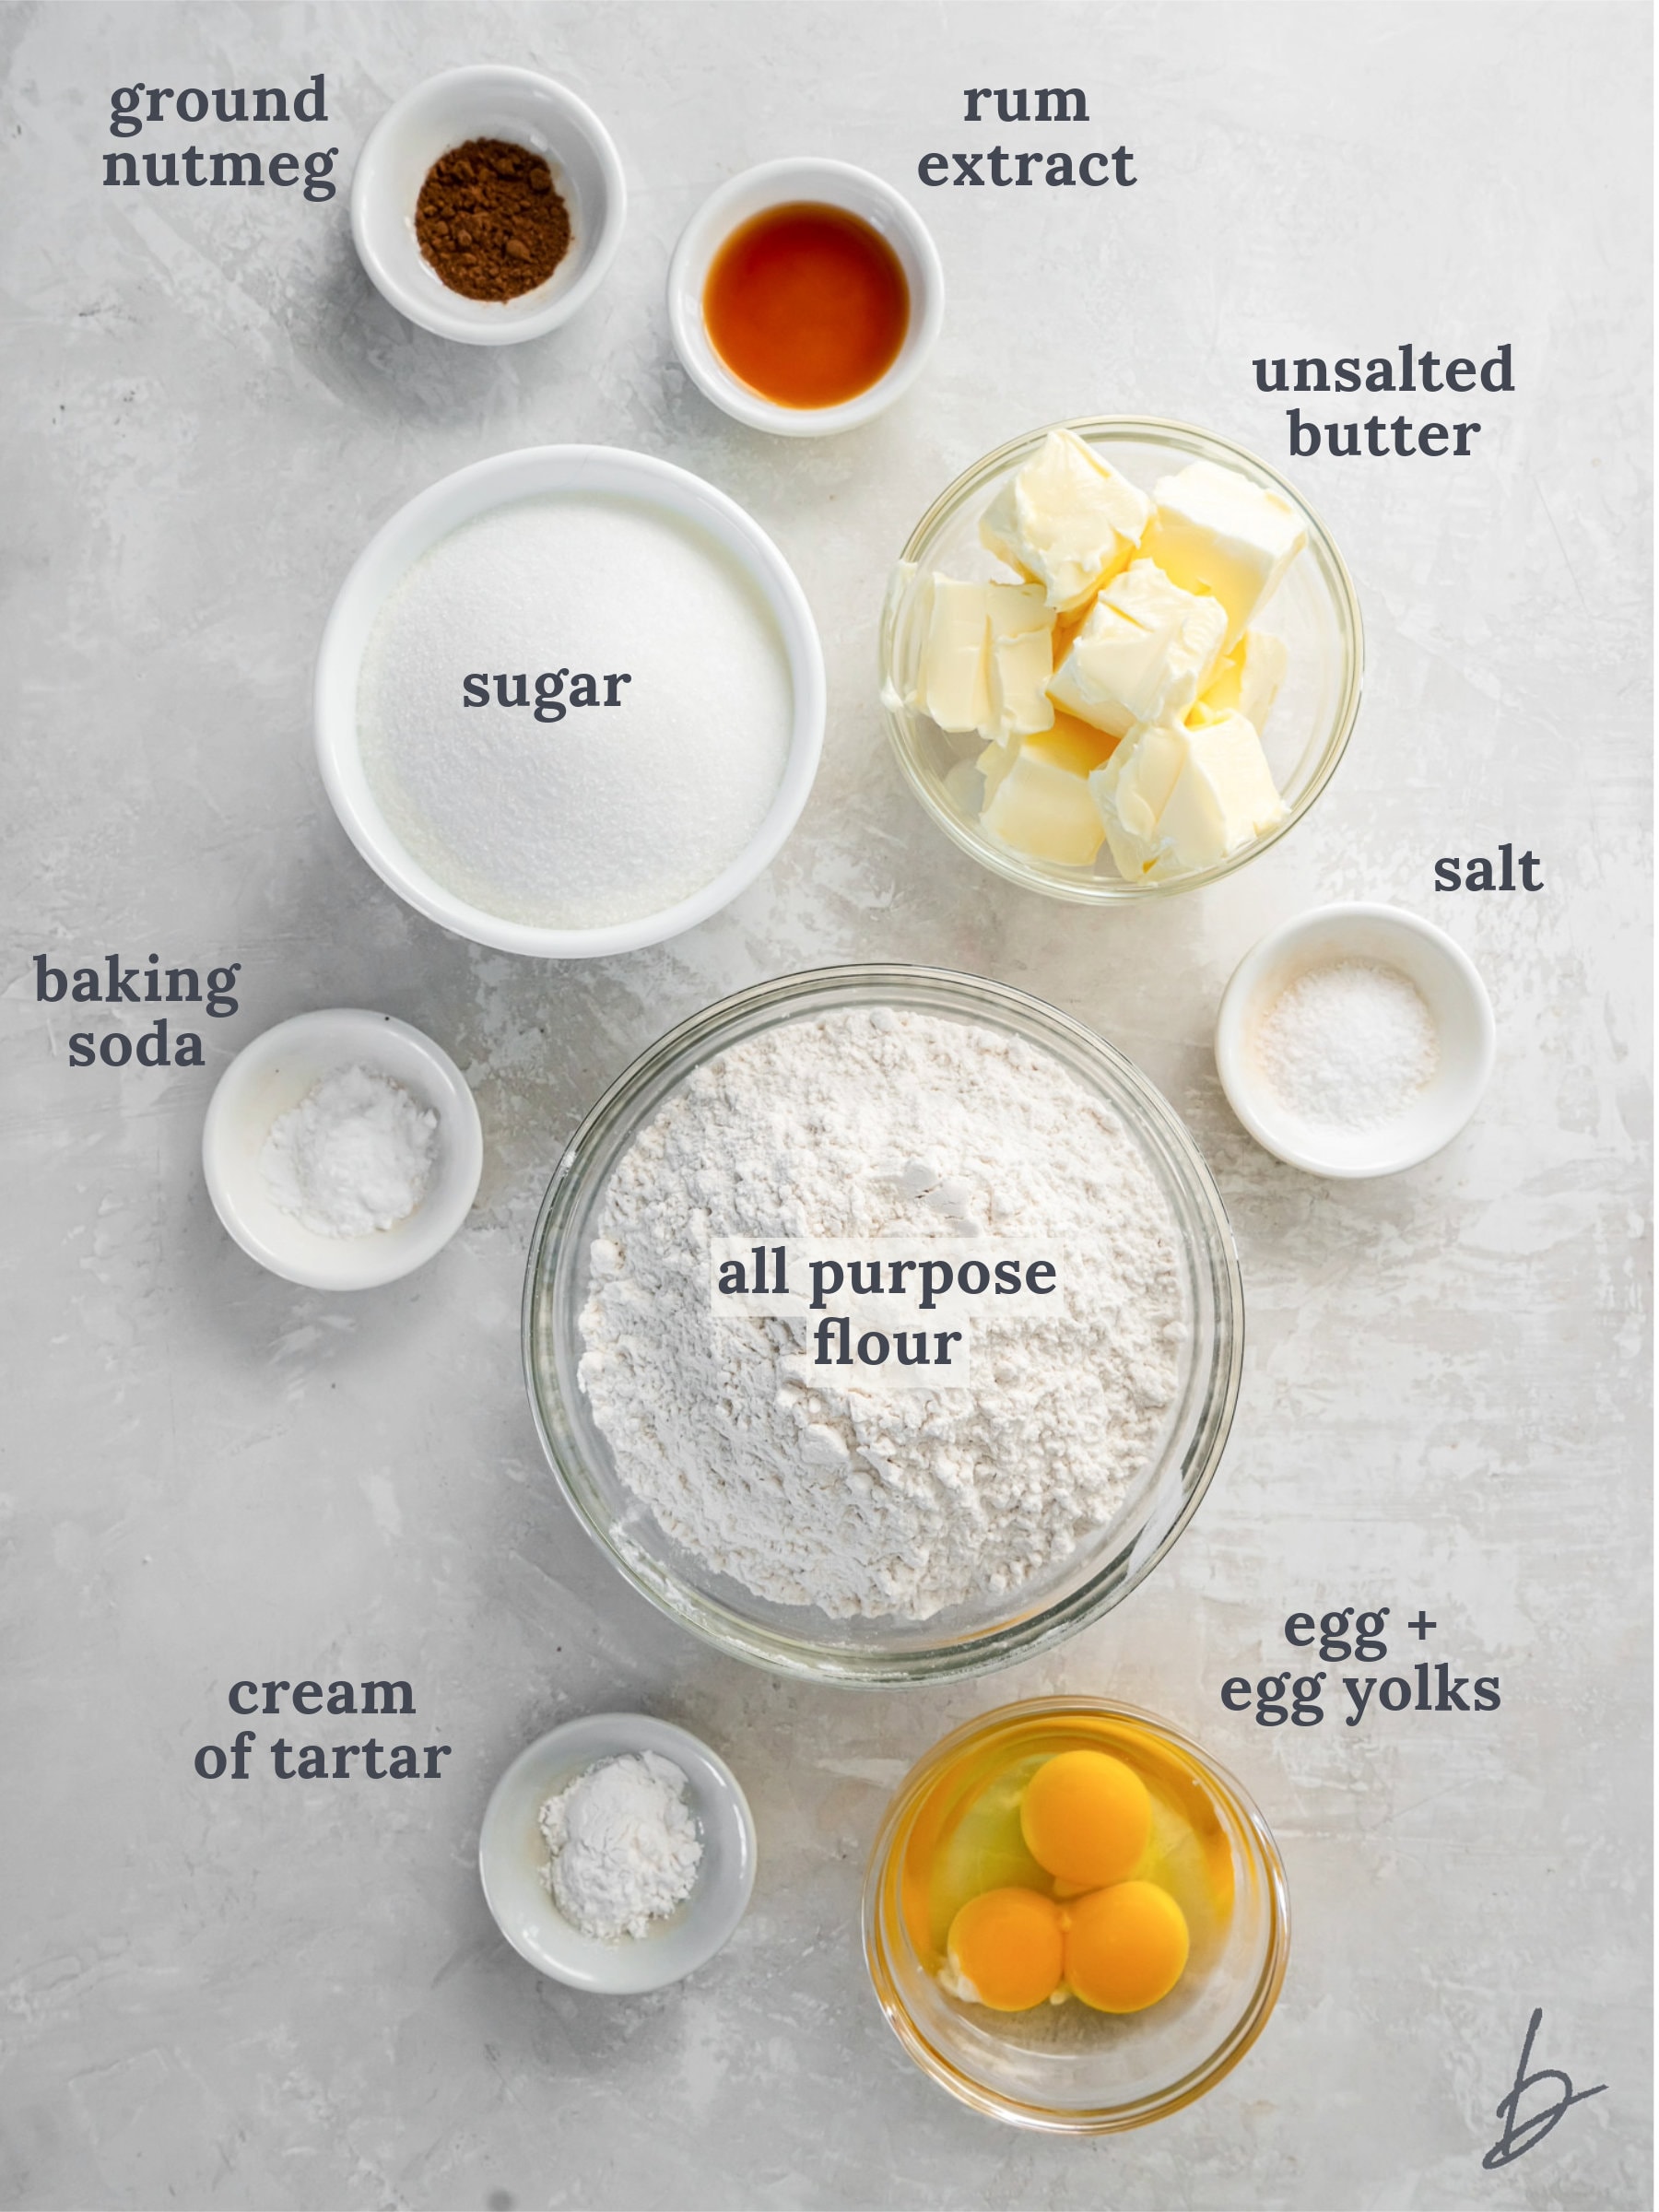 bowls of ingredients to make eggnog snickerdoodles.